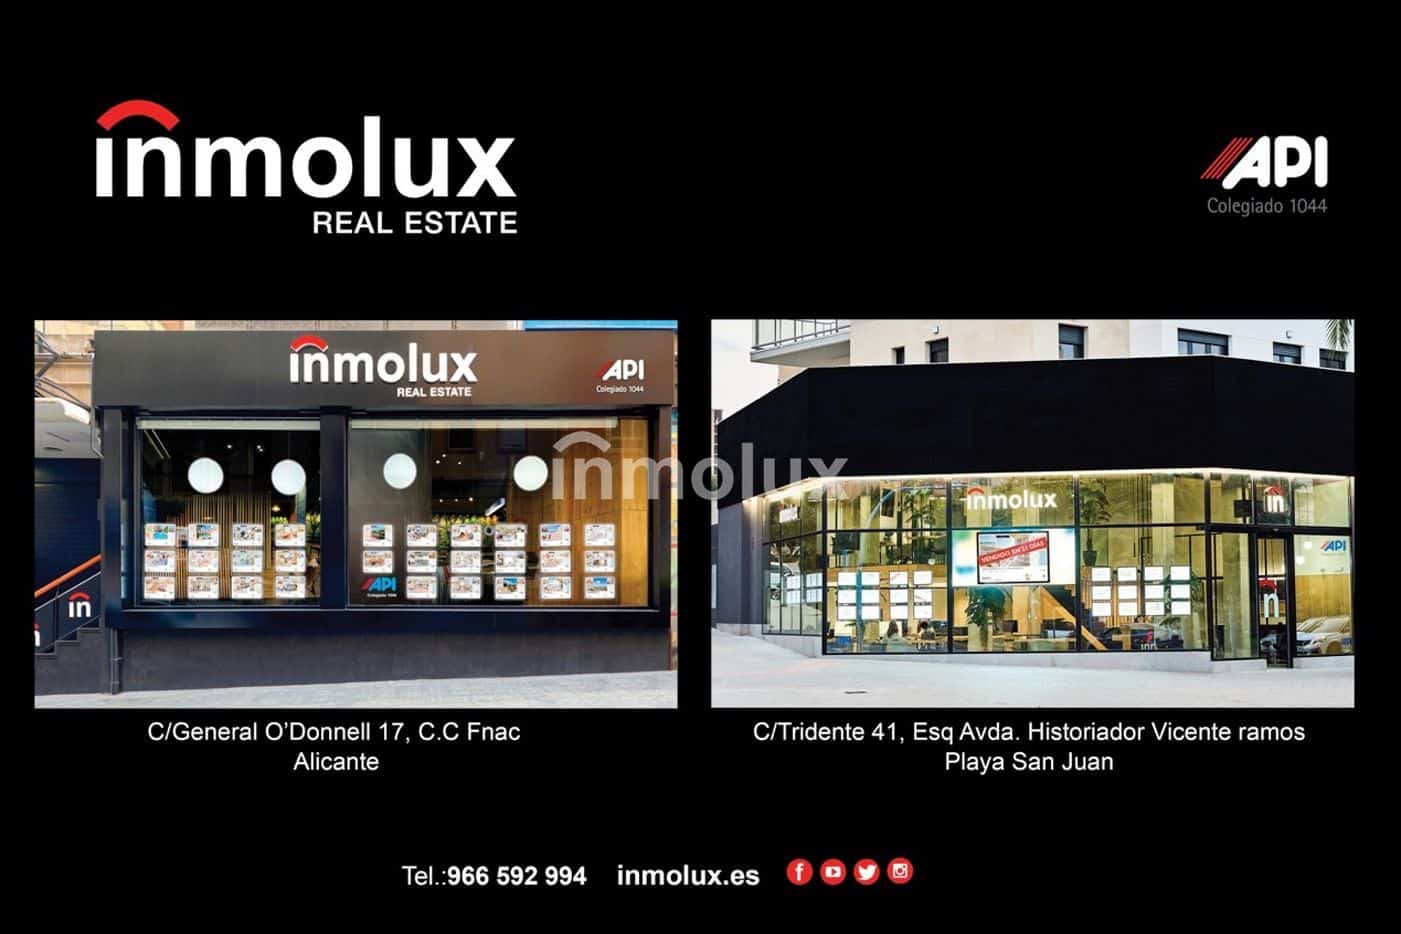 Inmlolux